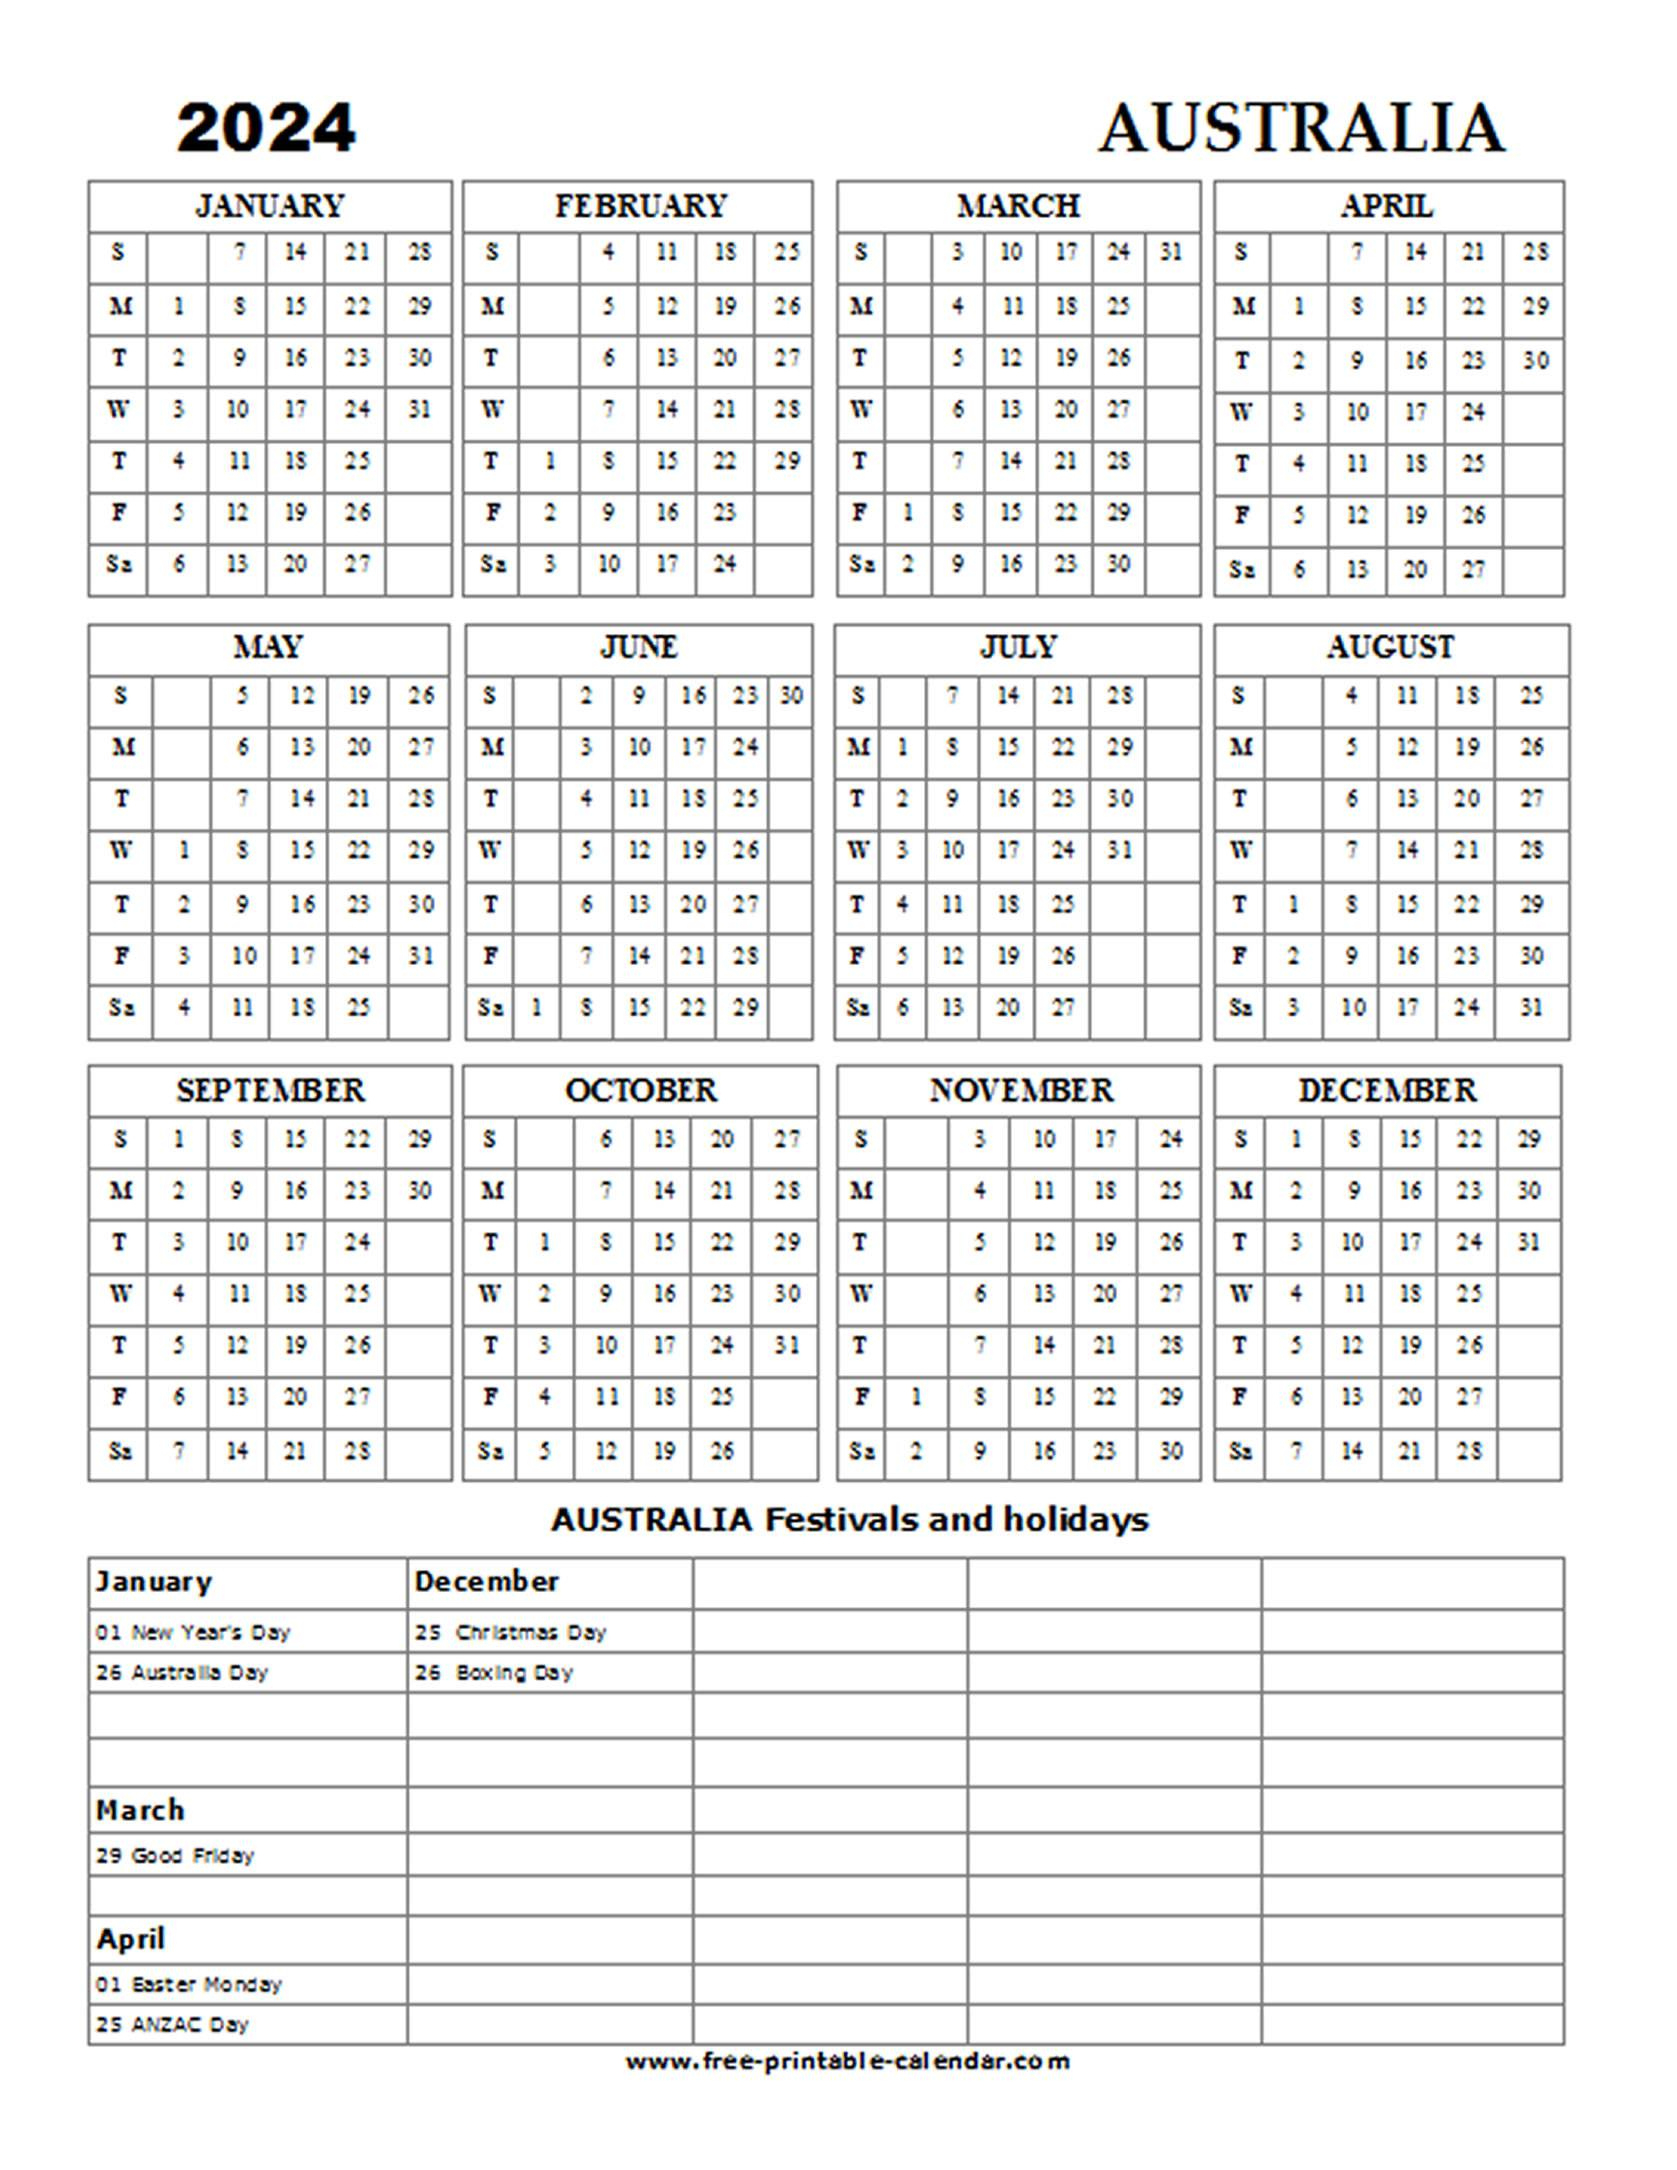 2024 Australia Holiday Calendar - Free-Printable-Calendar | 2024 Calendar With Holidays Australia Printable